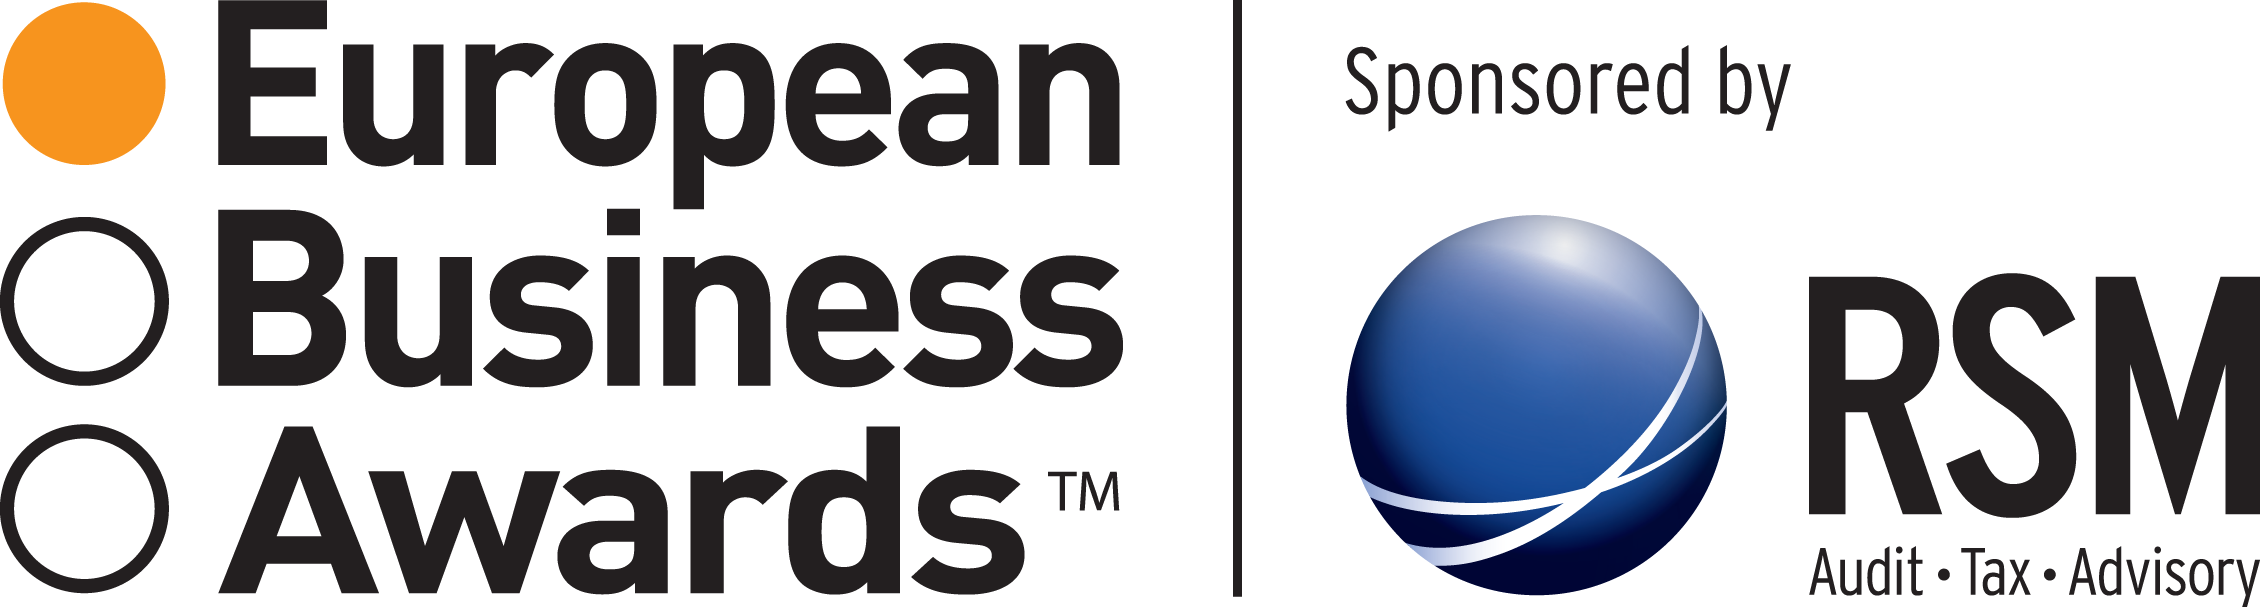 European Business Awards Logo